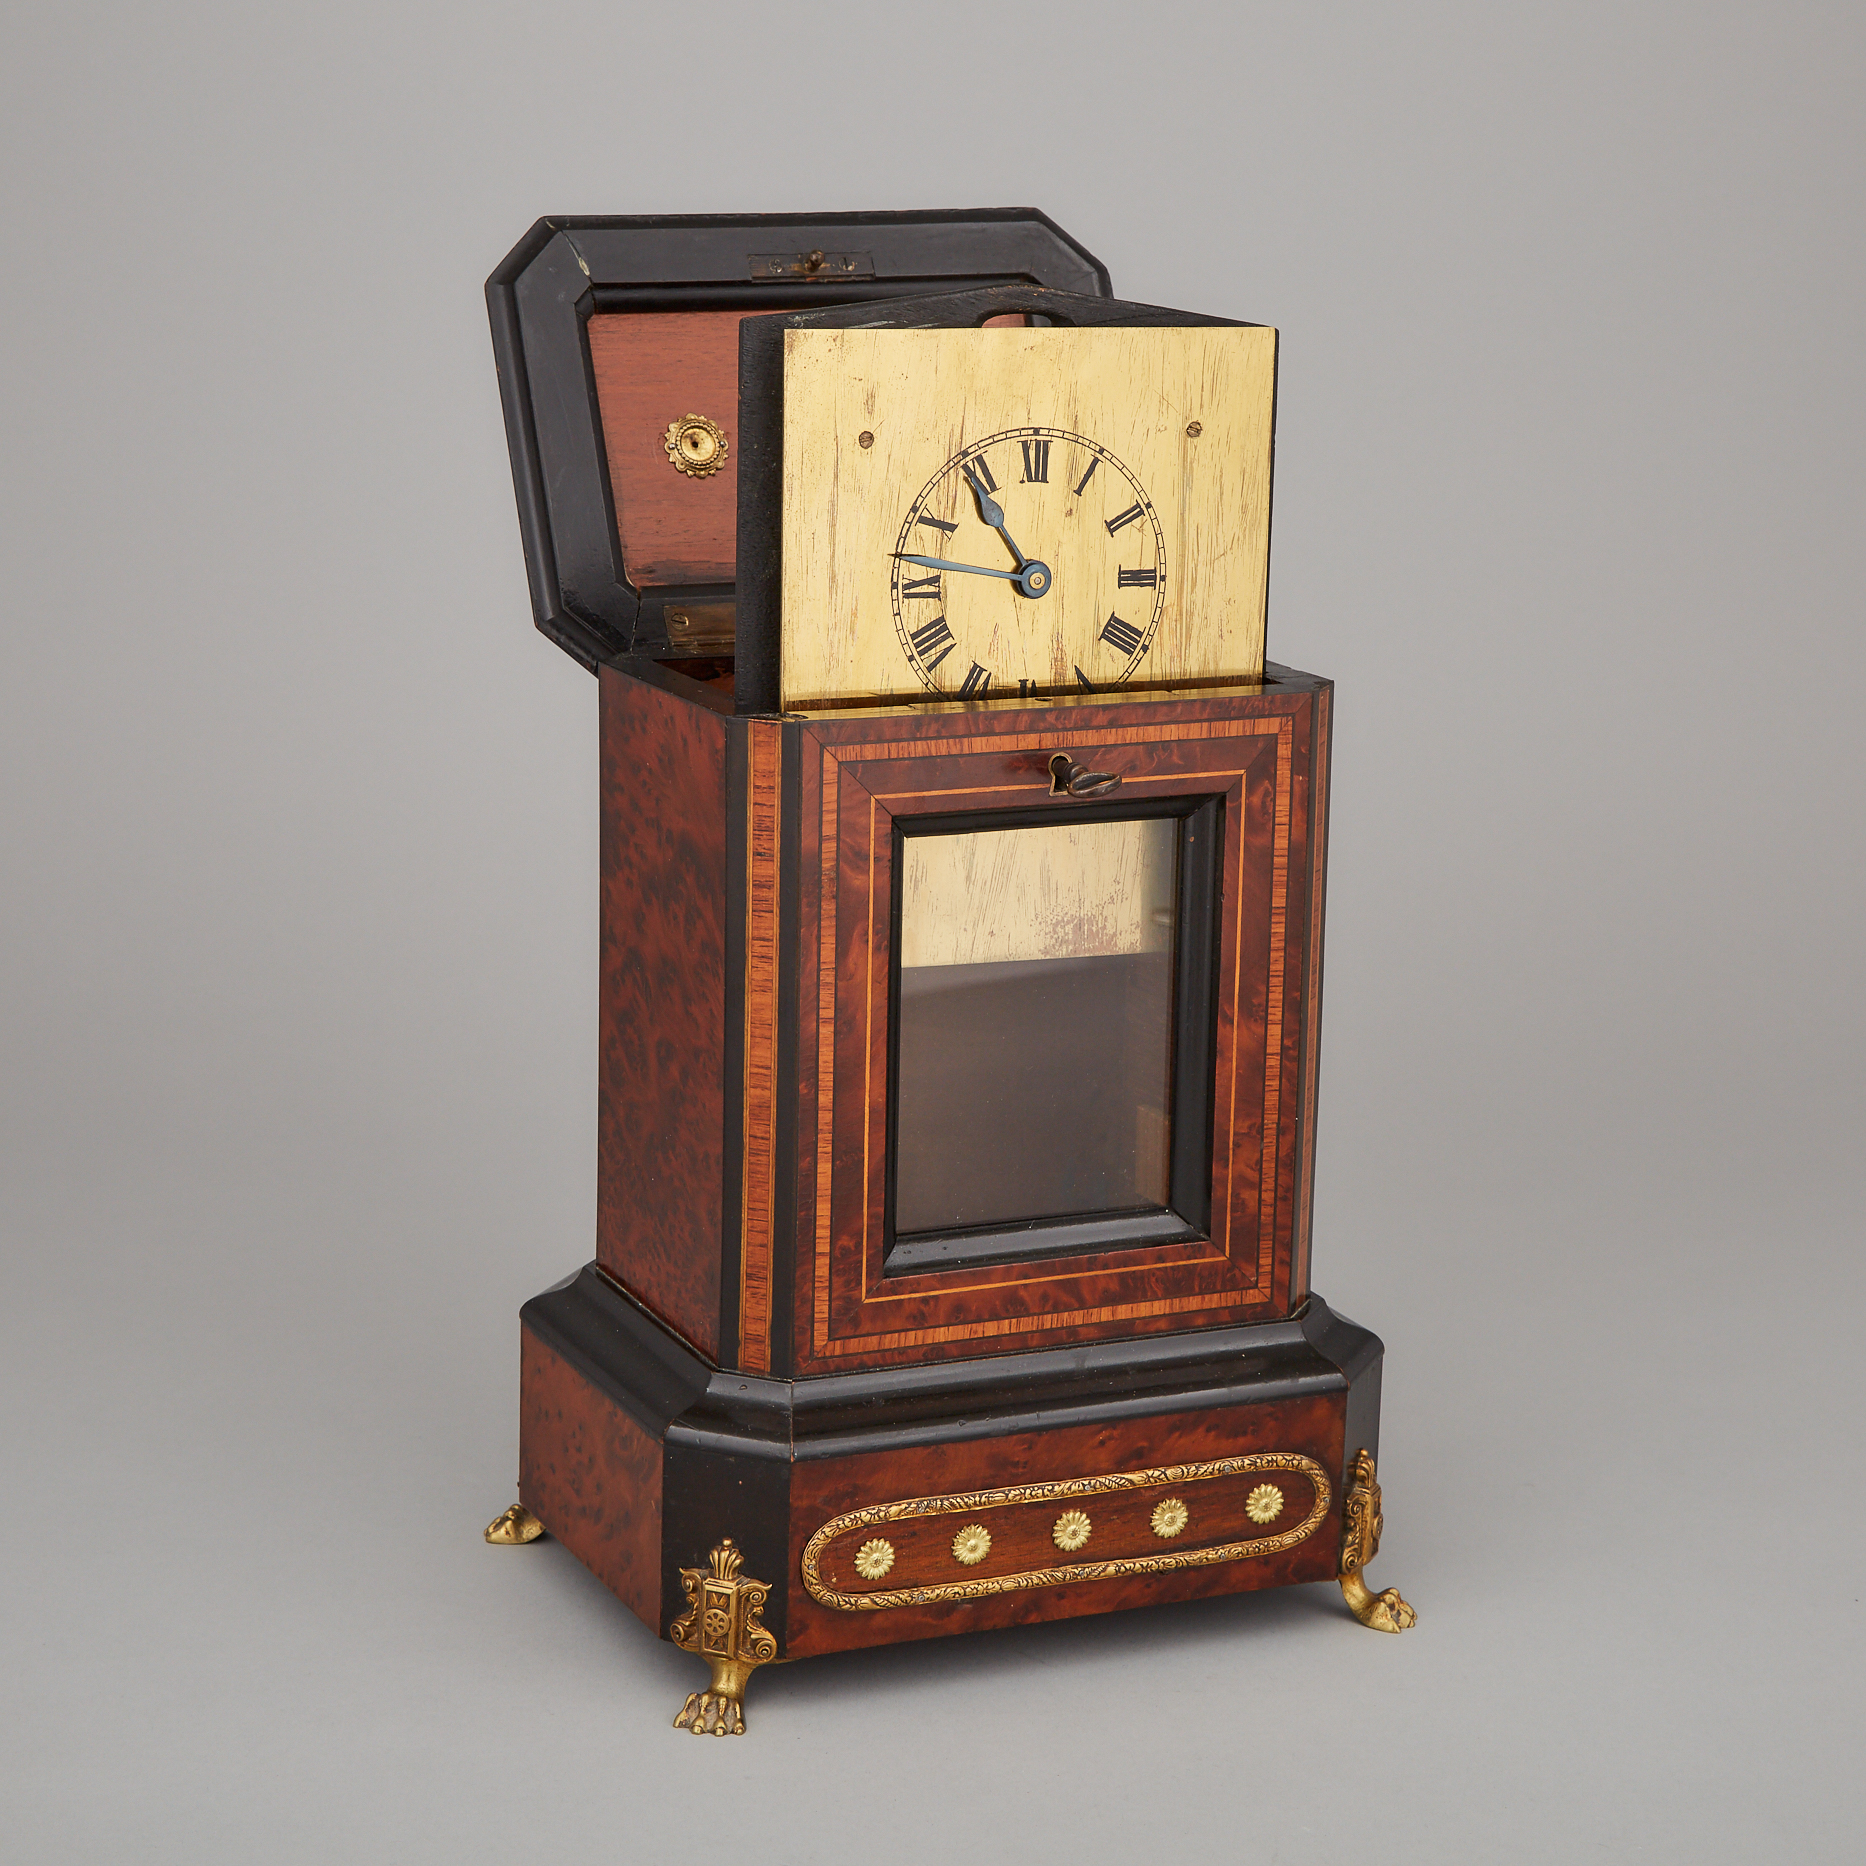 Napoleon III  Kingwood Banded Burl Walnut and Ebonized Table Clock, Duverdry & Bloquel, Paris, c.1900